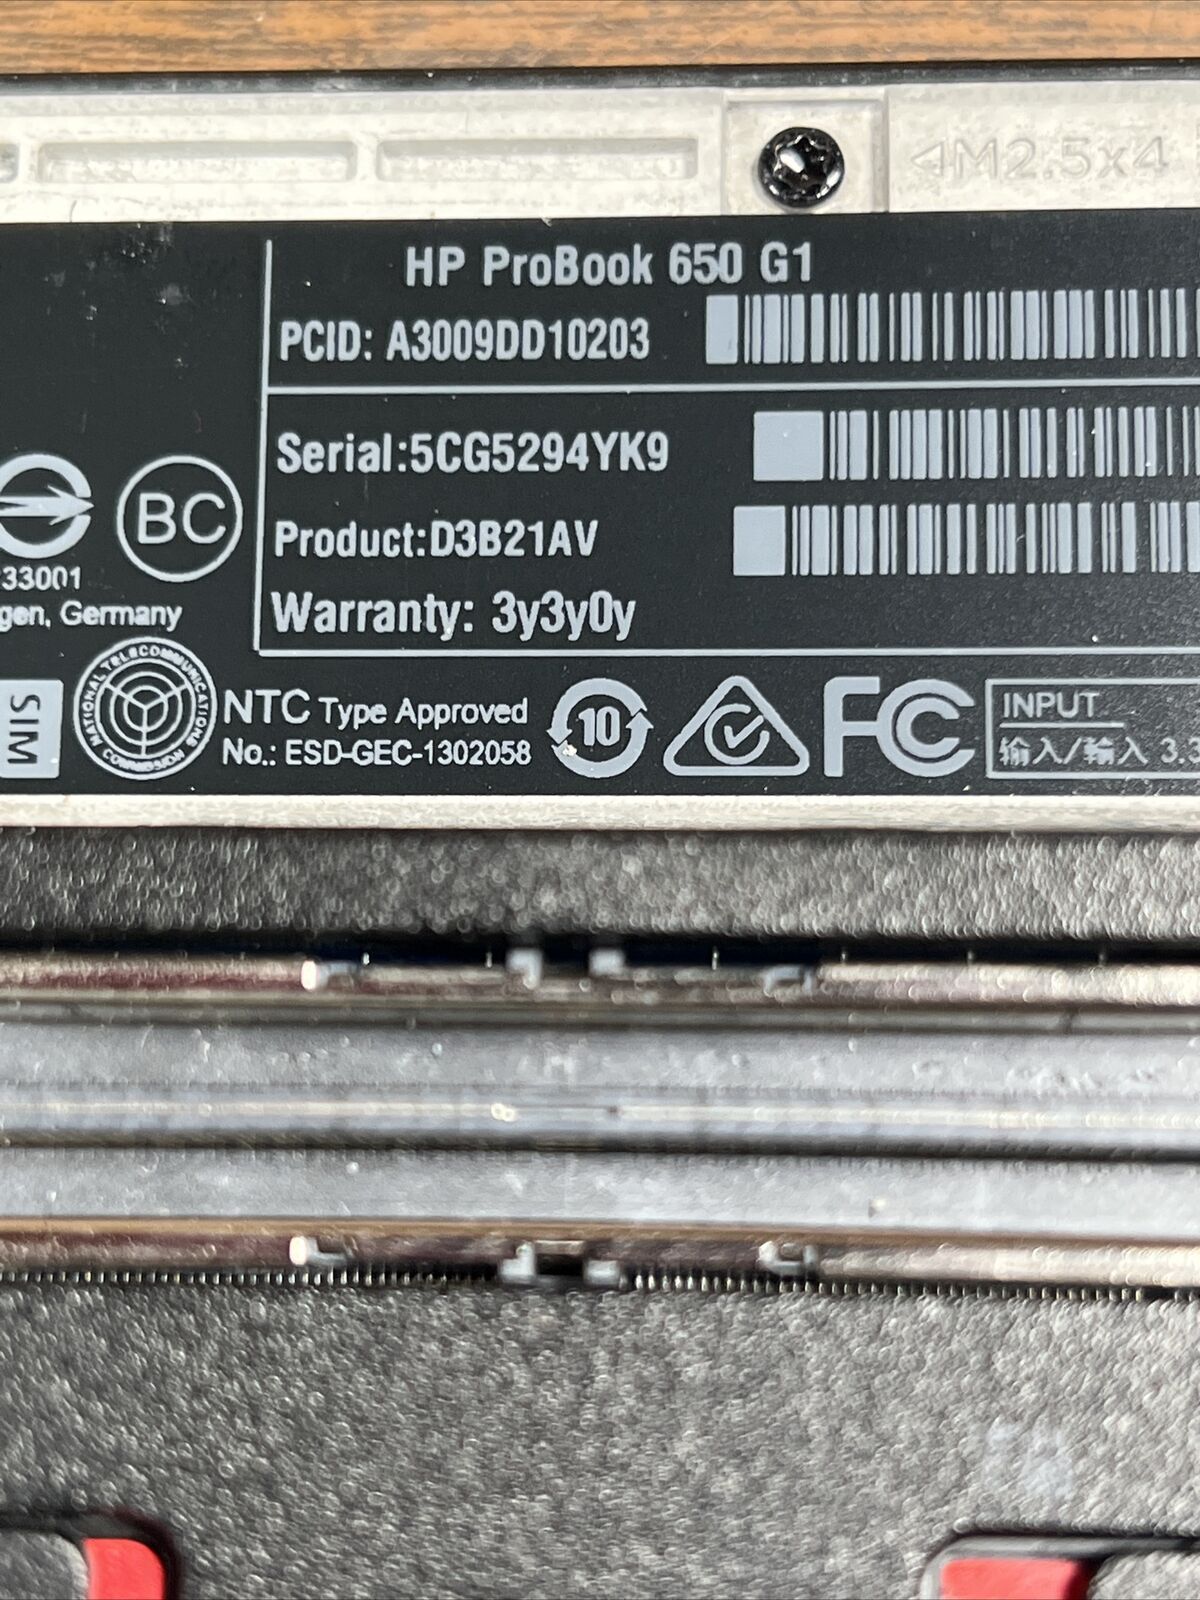 PC/タブレット ノートPC HP PROBOOK 650 G1 I7 INTEL CORE i7-4600MQ 2.90GHZ 8GB 